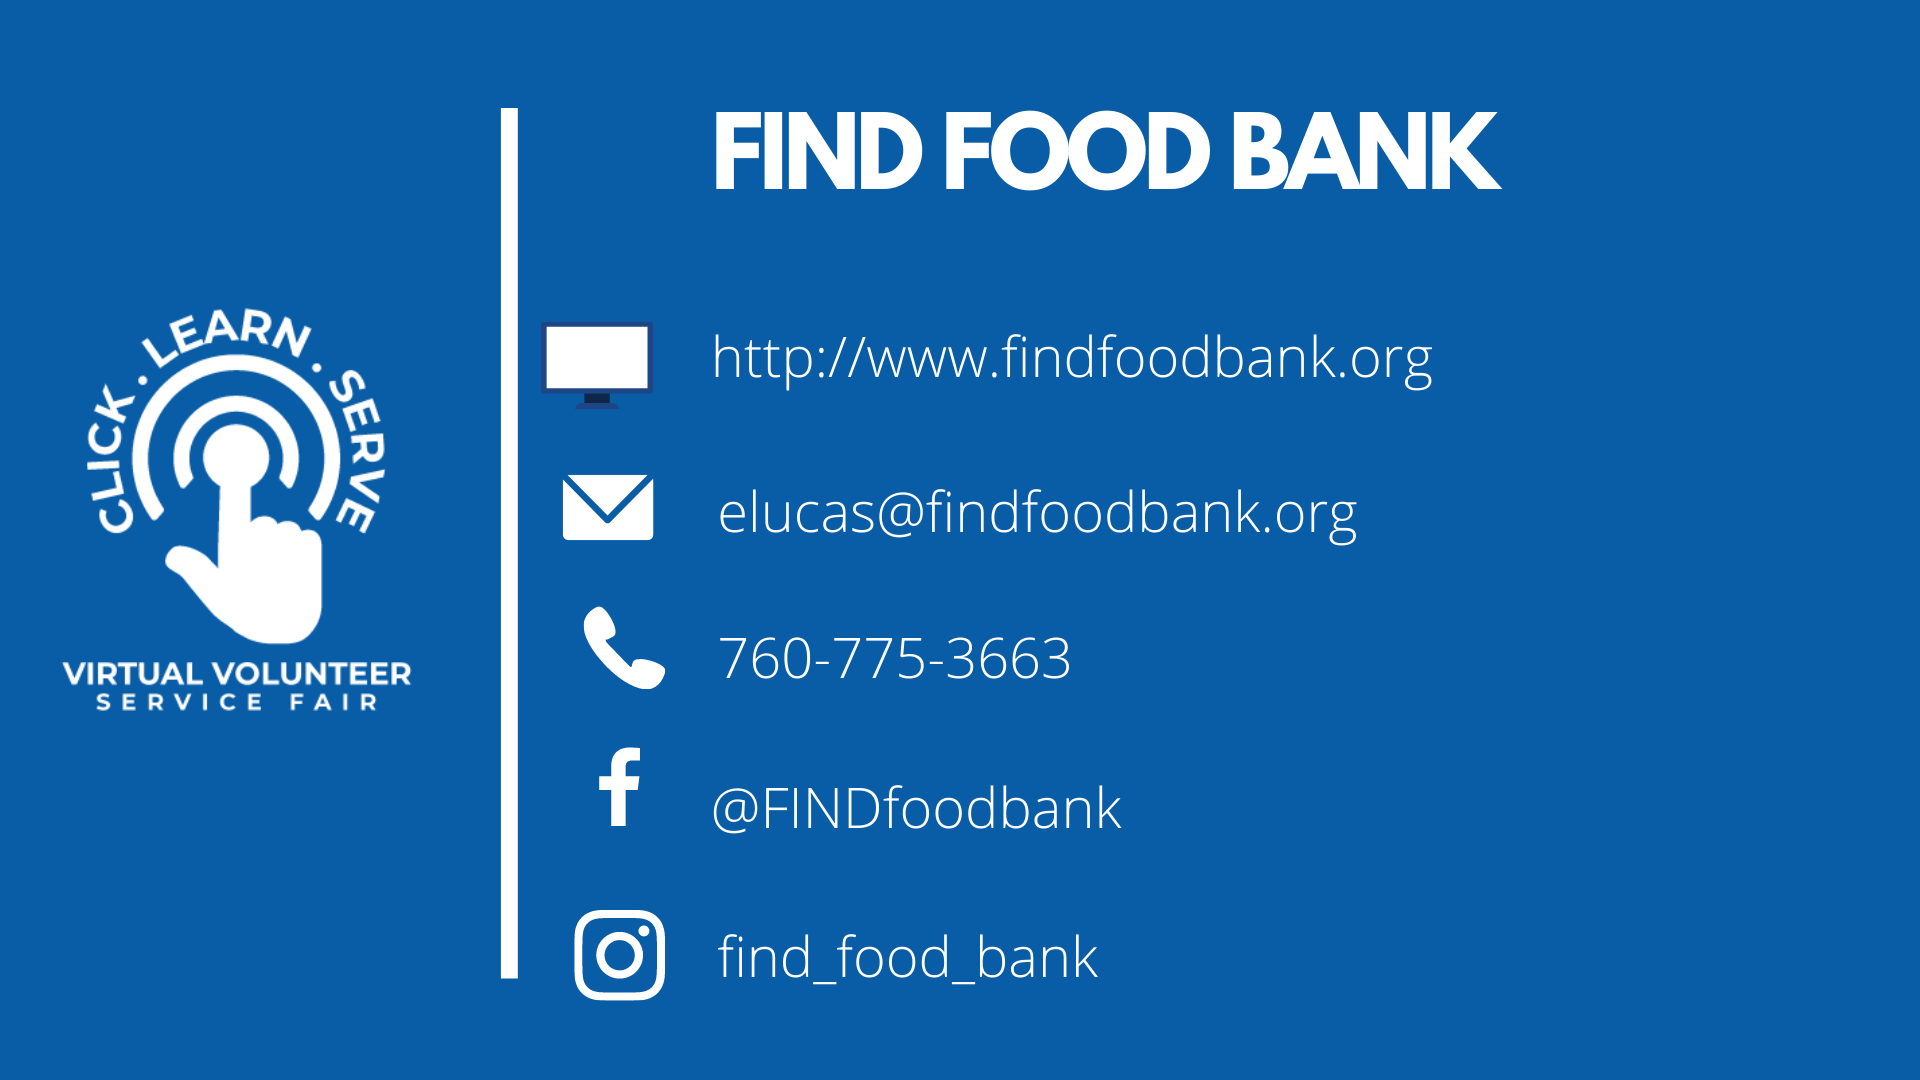 Find Food Bank video for Virtual Volunteer Service Fair.